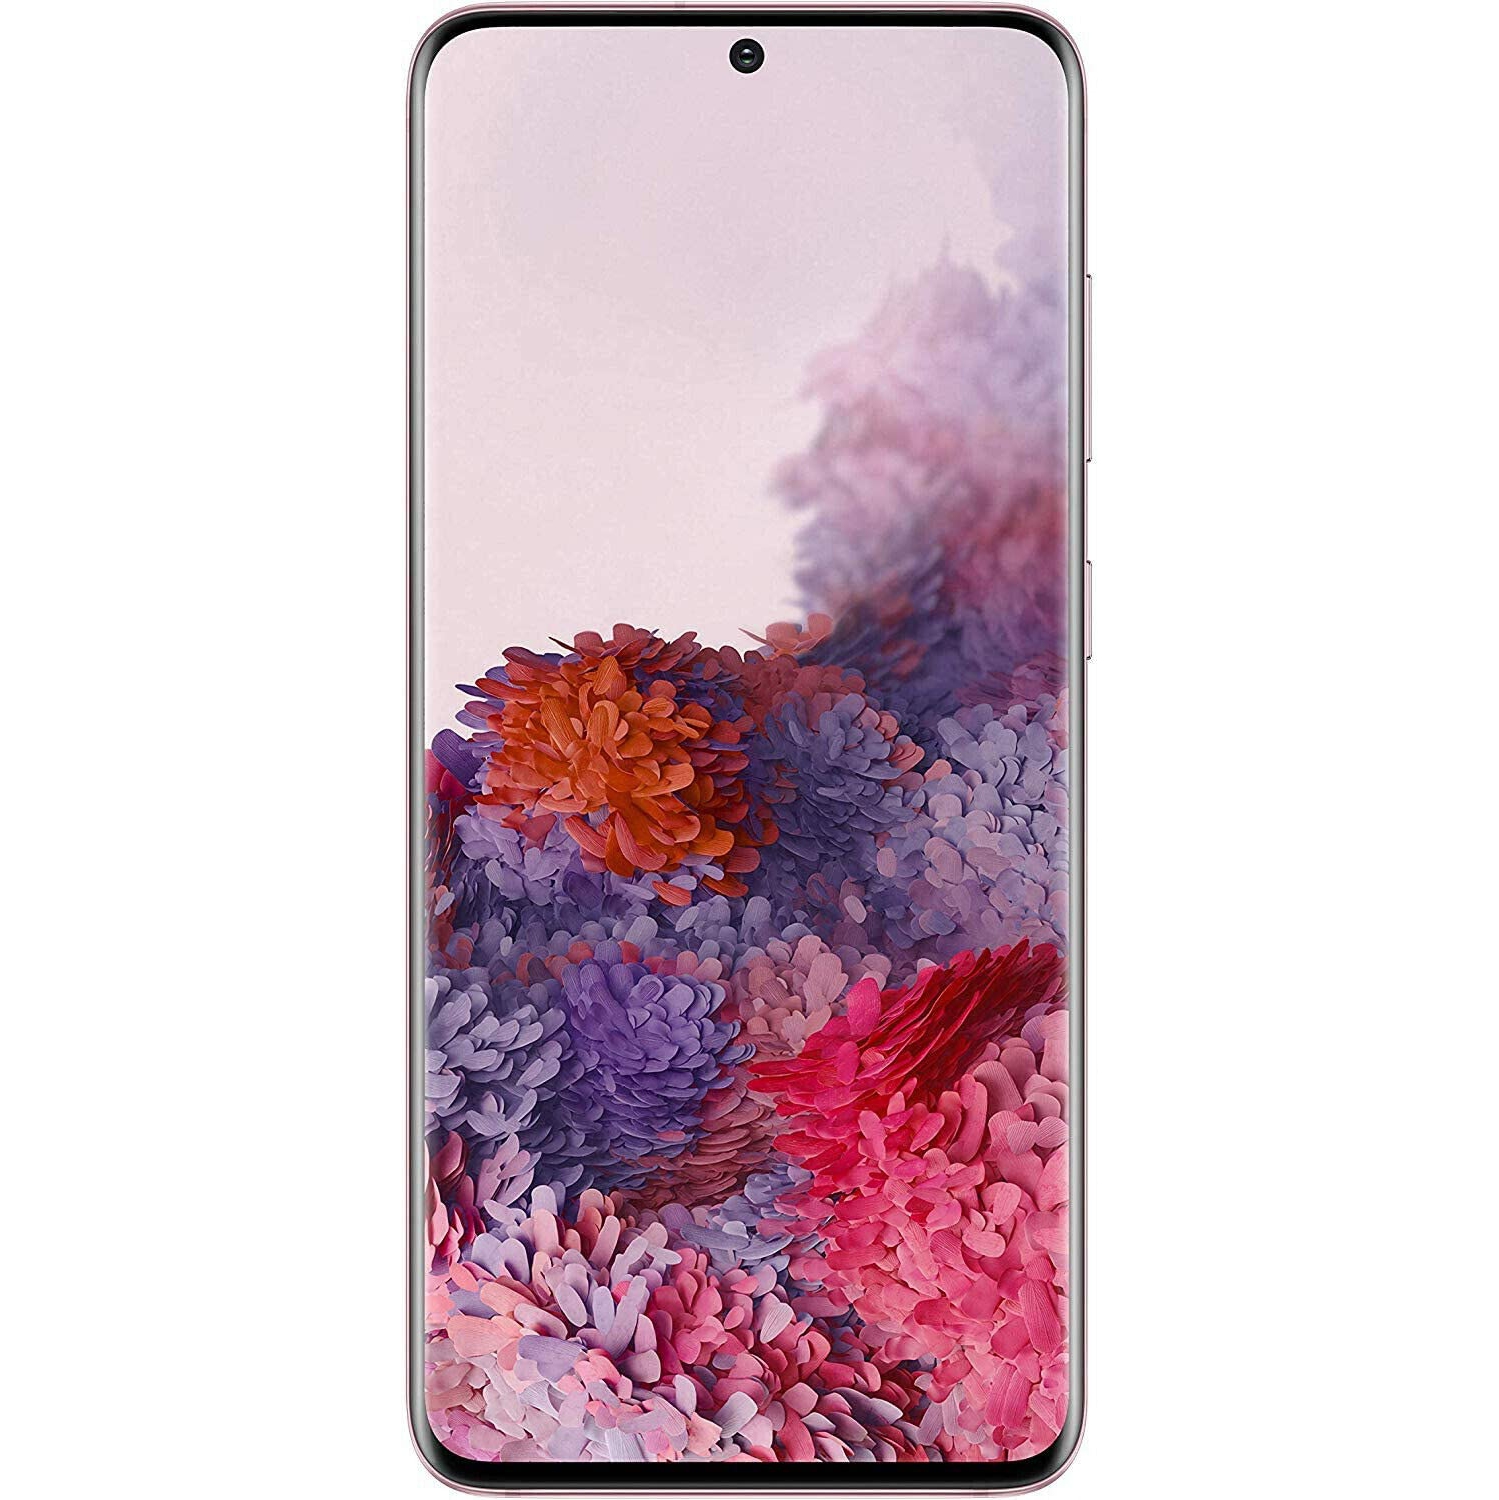 Refurbished (Good) - Samsung Galaxy S20 5G 128GB Smartphone - Cloud Pink - Unlocked